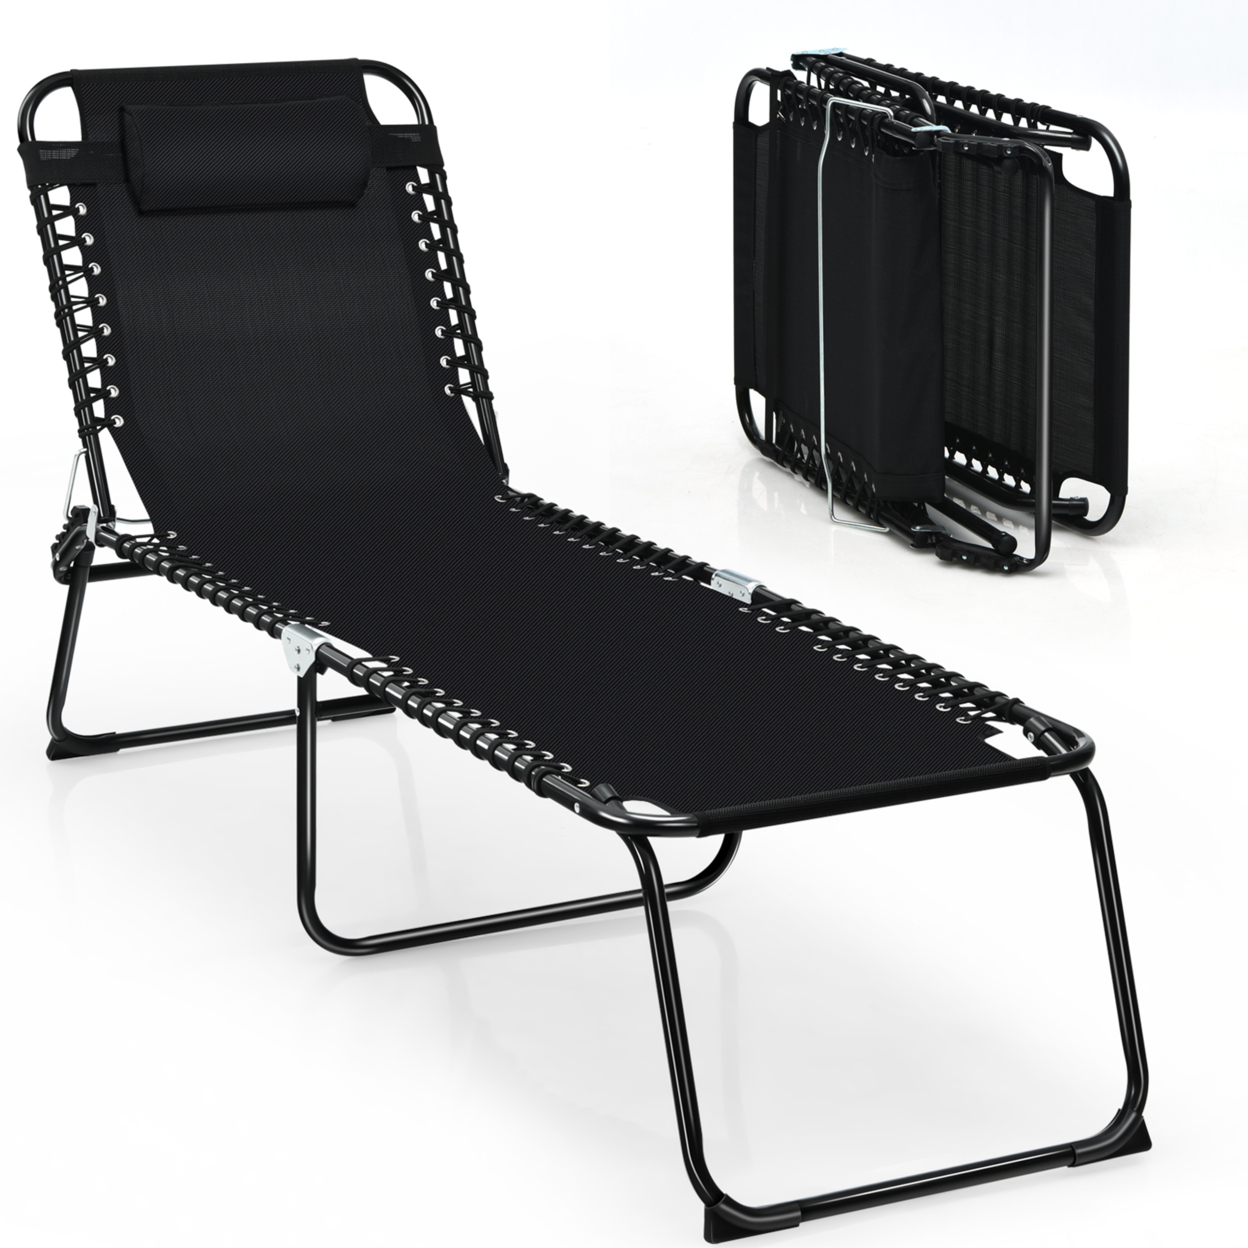 Folding Beach Lounger Chaise Lounge Chair W/ Pillow 4-Level Backrest Grey/Black - Black